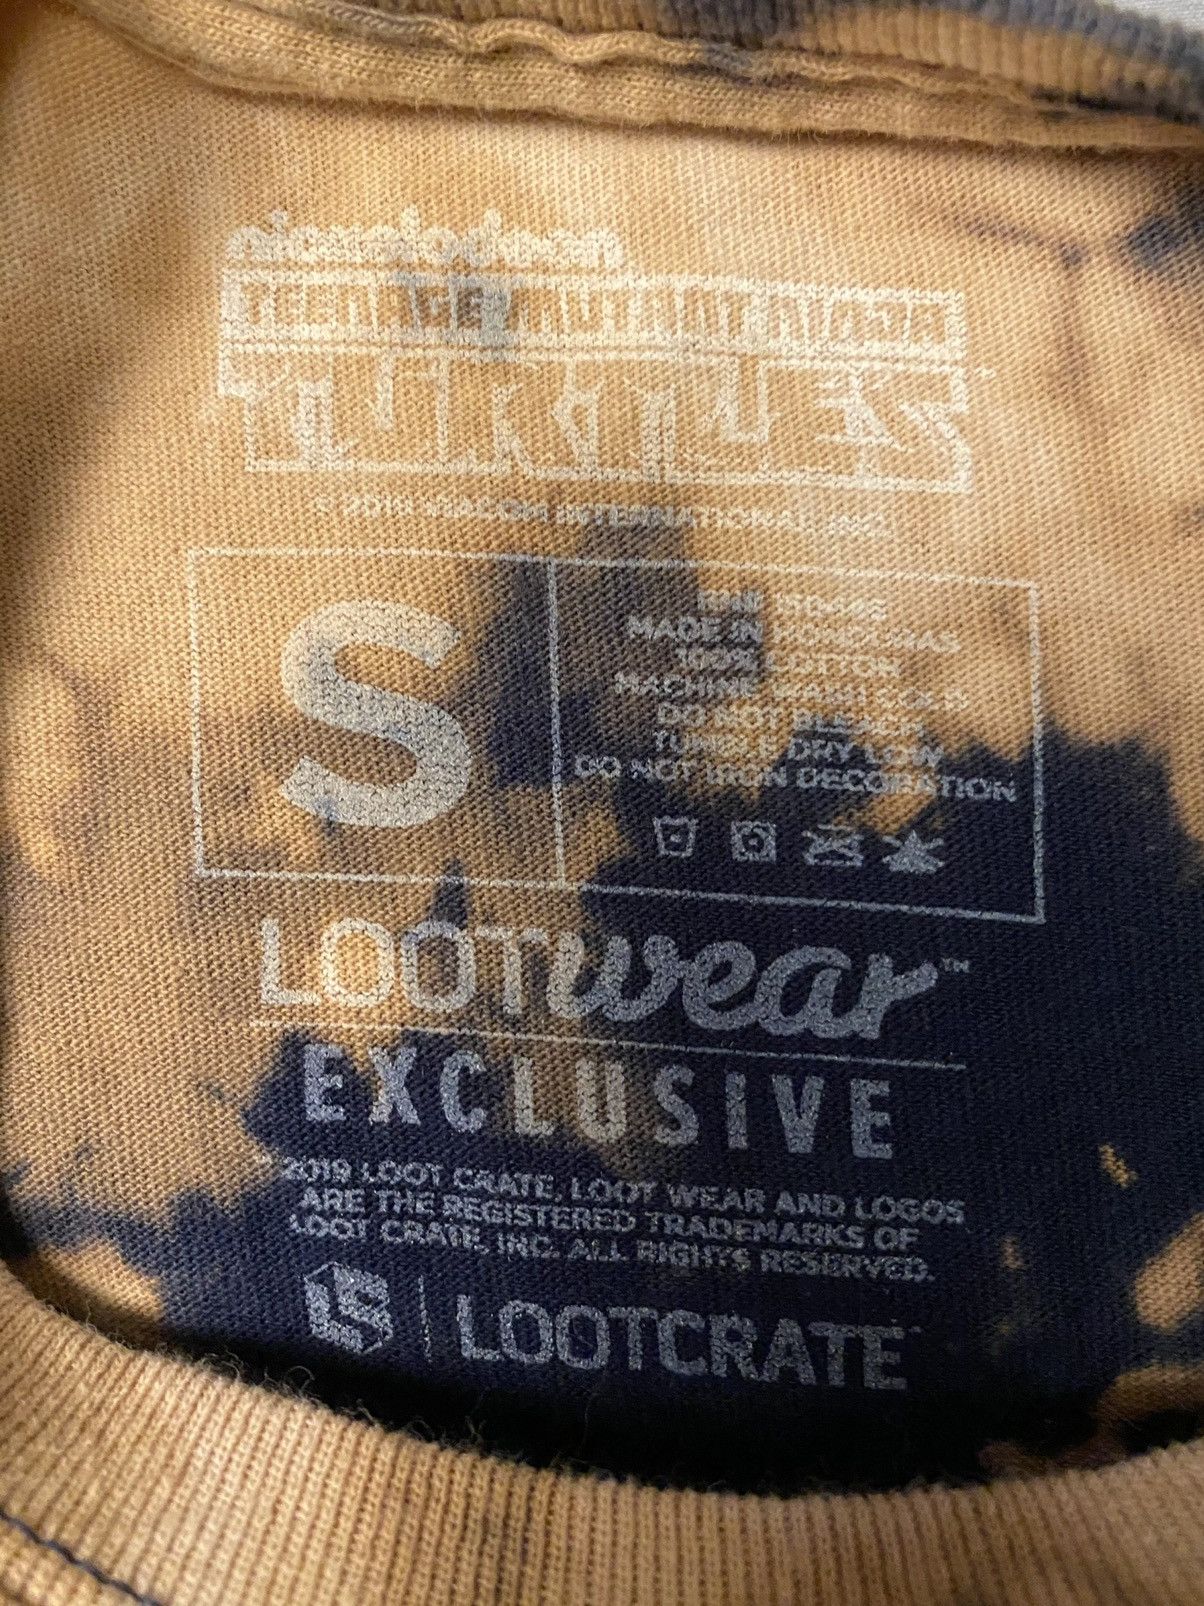 Vintage TMNT Technodrone Acidwash Bleach Tiedye Custom Shirt Size US S / EU 44-46 / 1 - 4 Preview